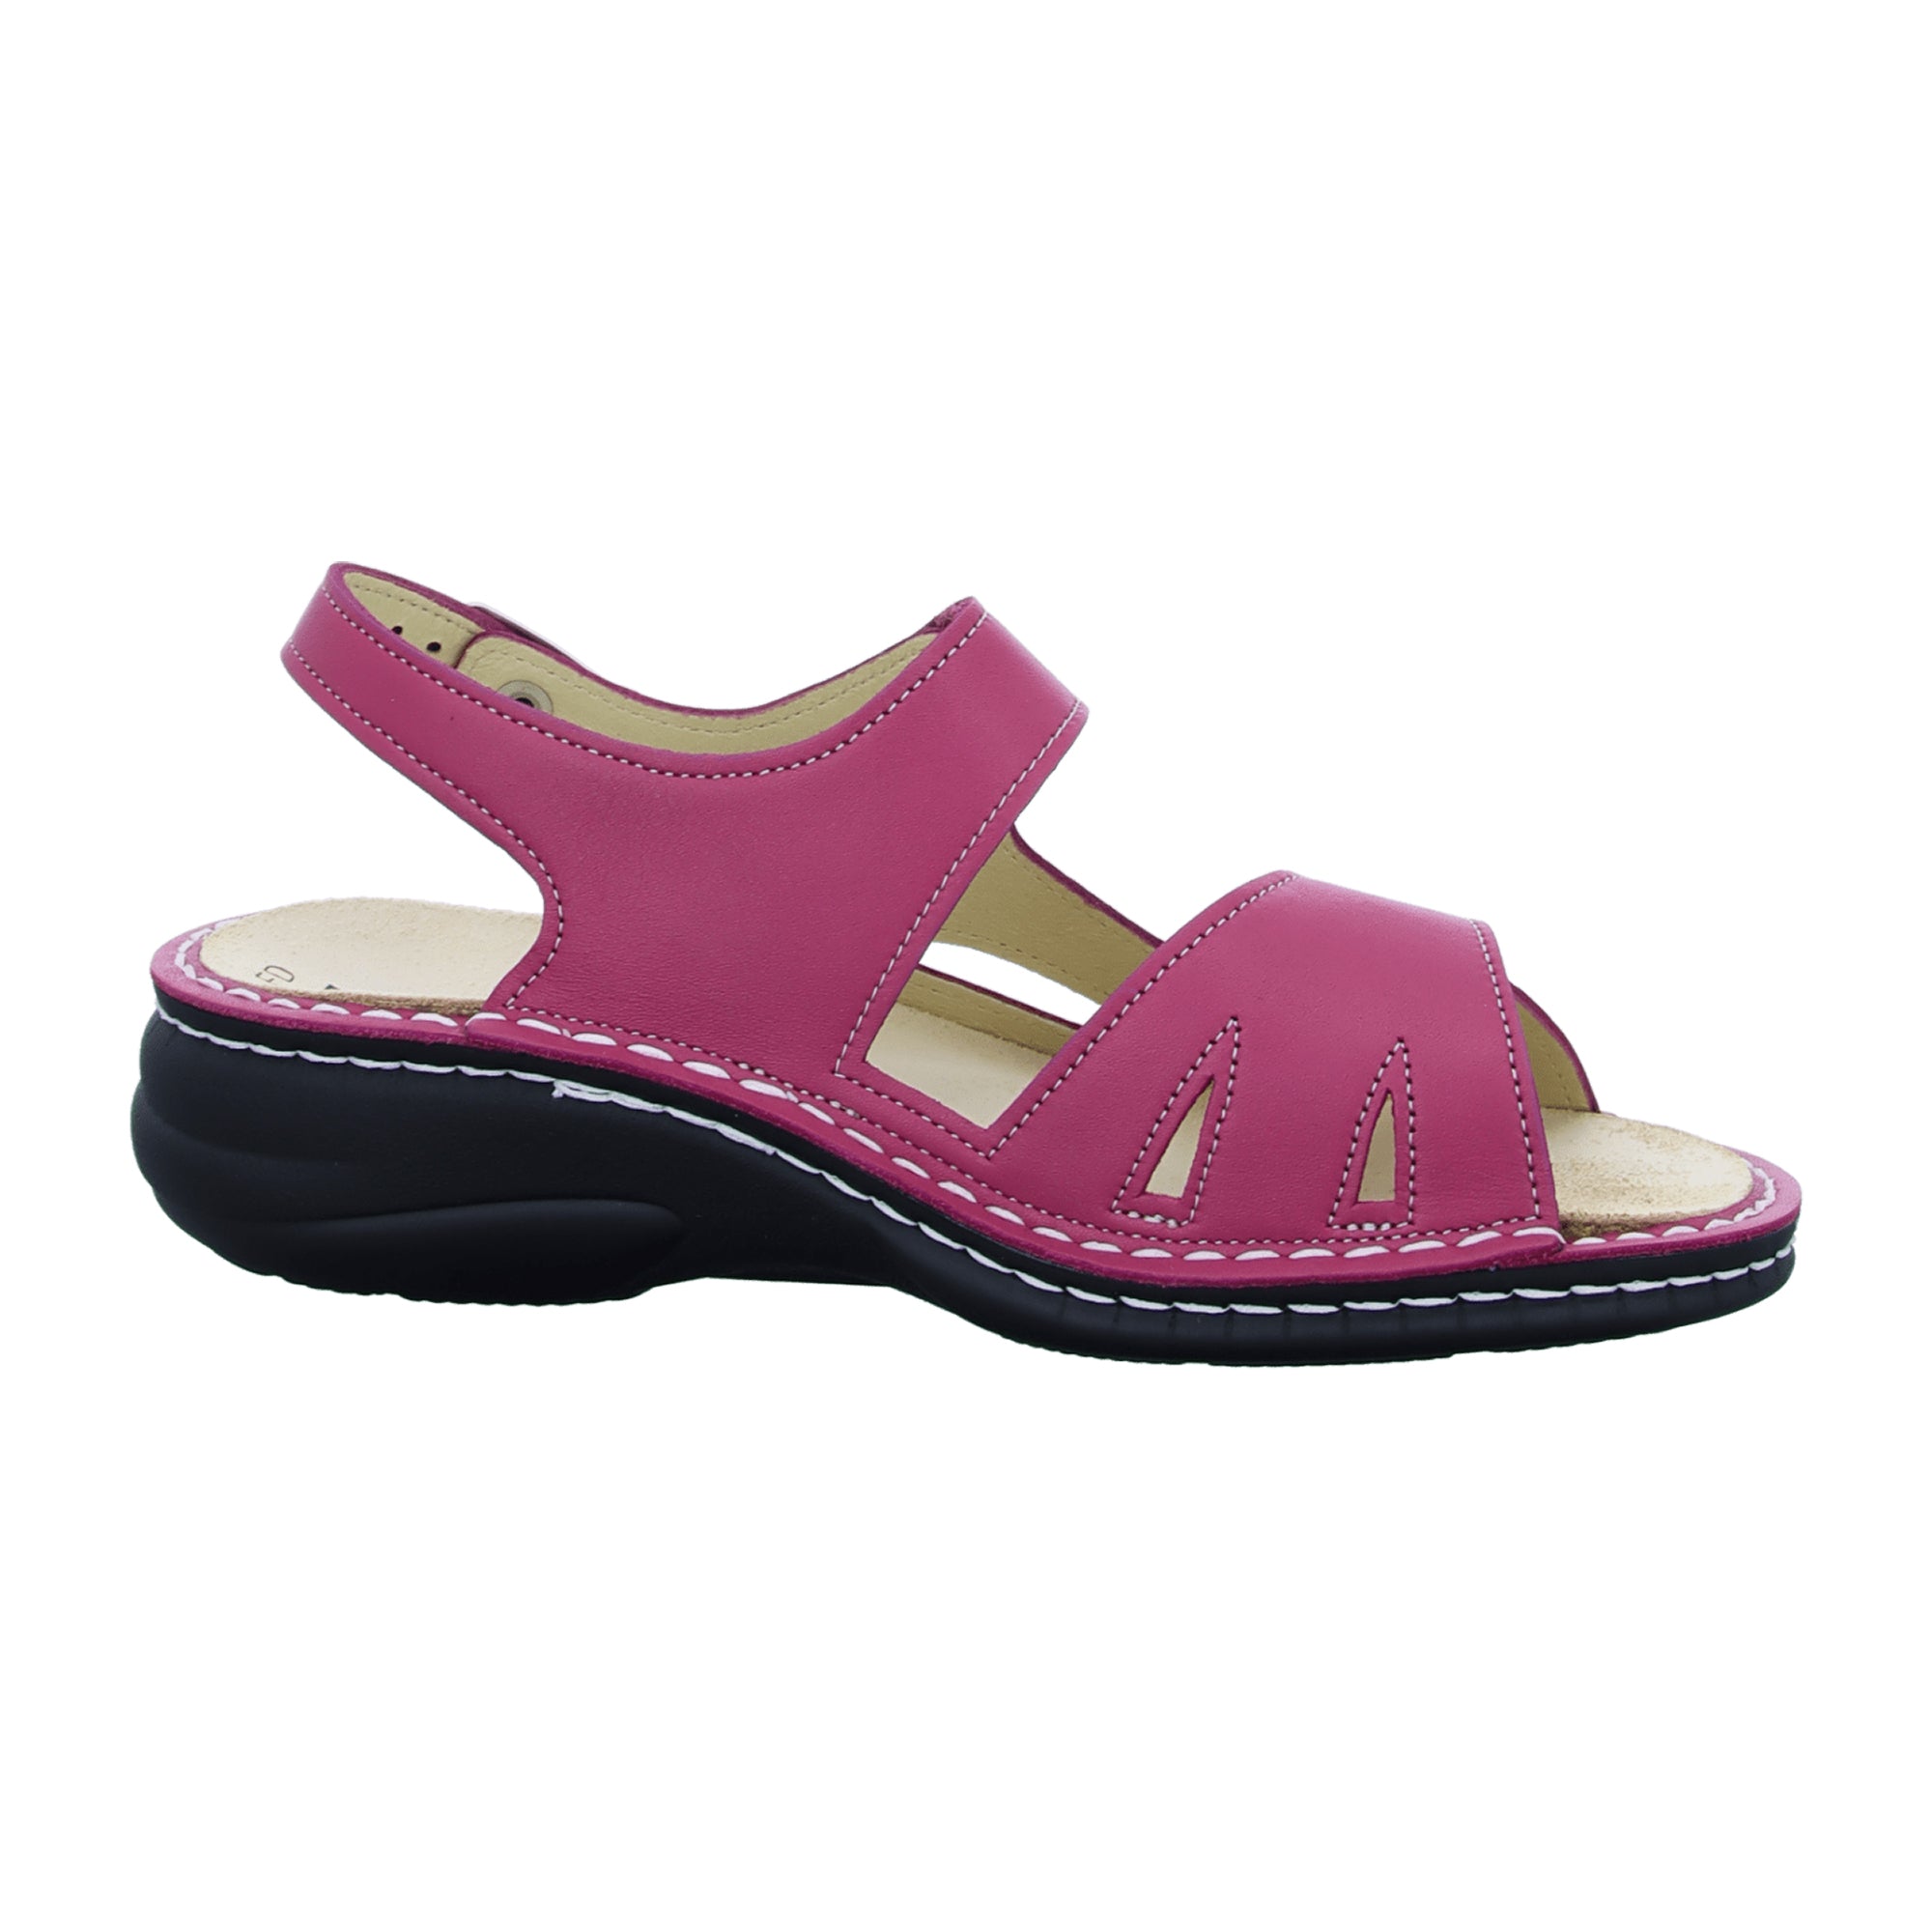 Finn Comfort Denia Women's Comfortable Slip-On Shoes, Vibrant Pink